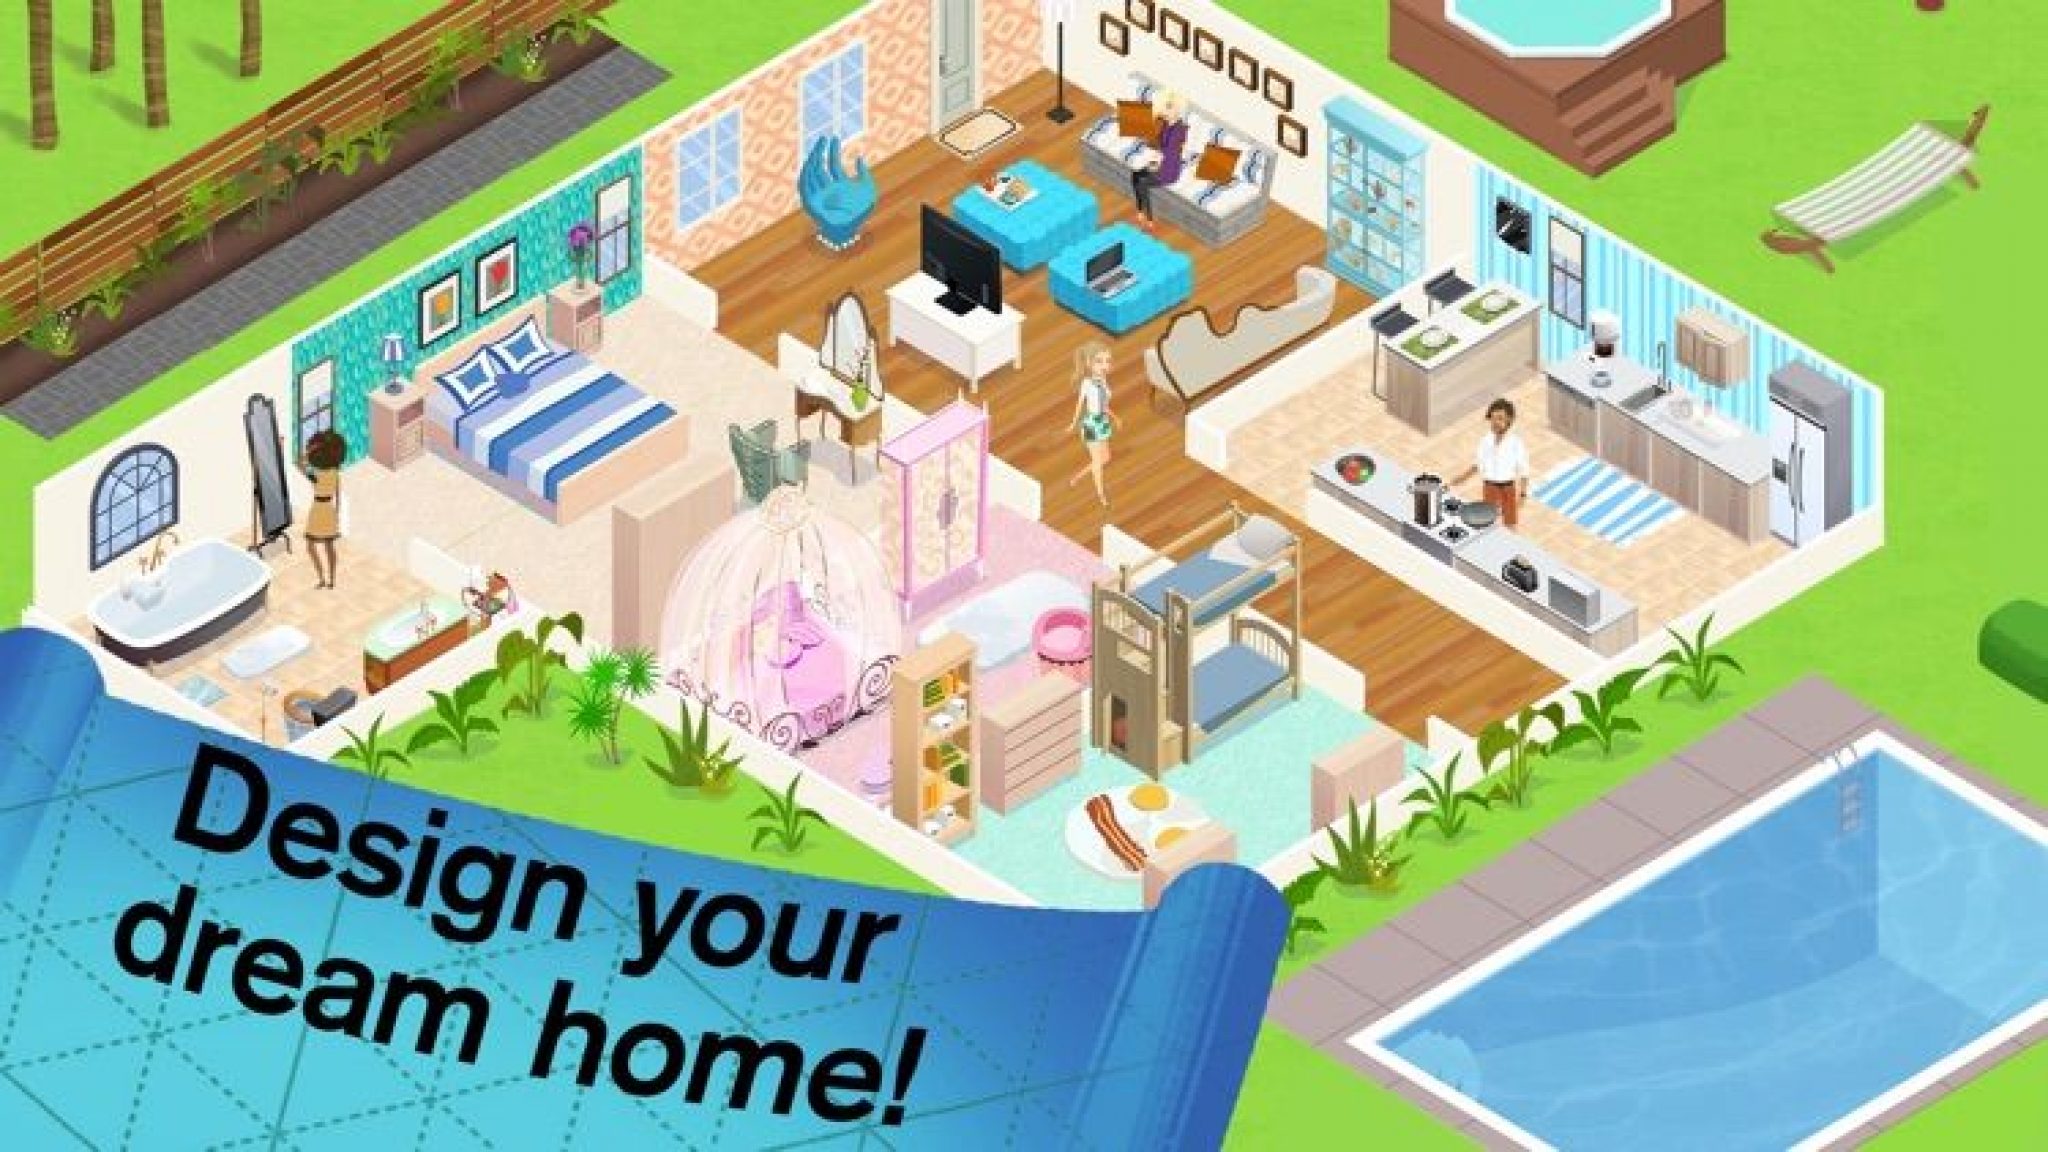 Design House Game Online